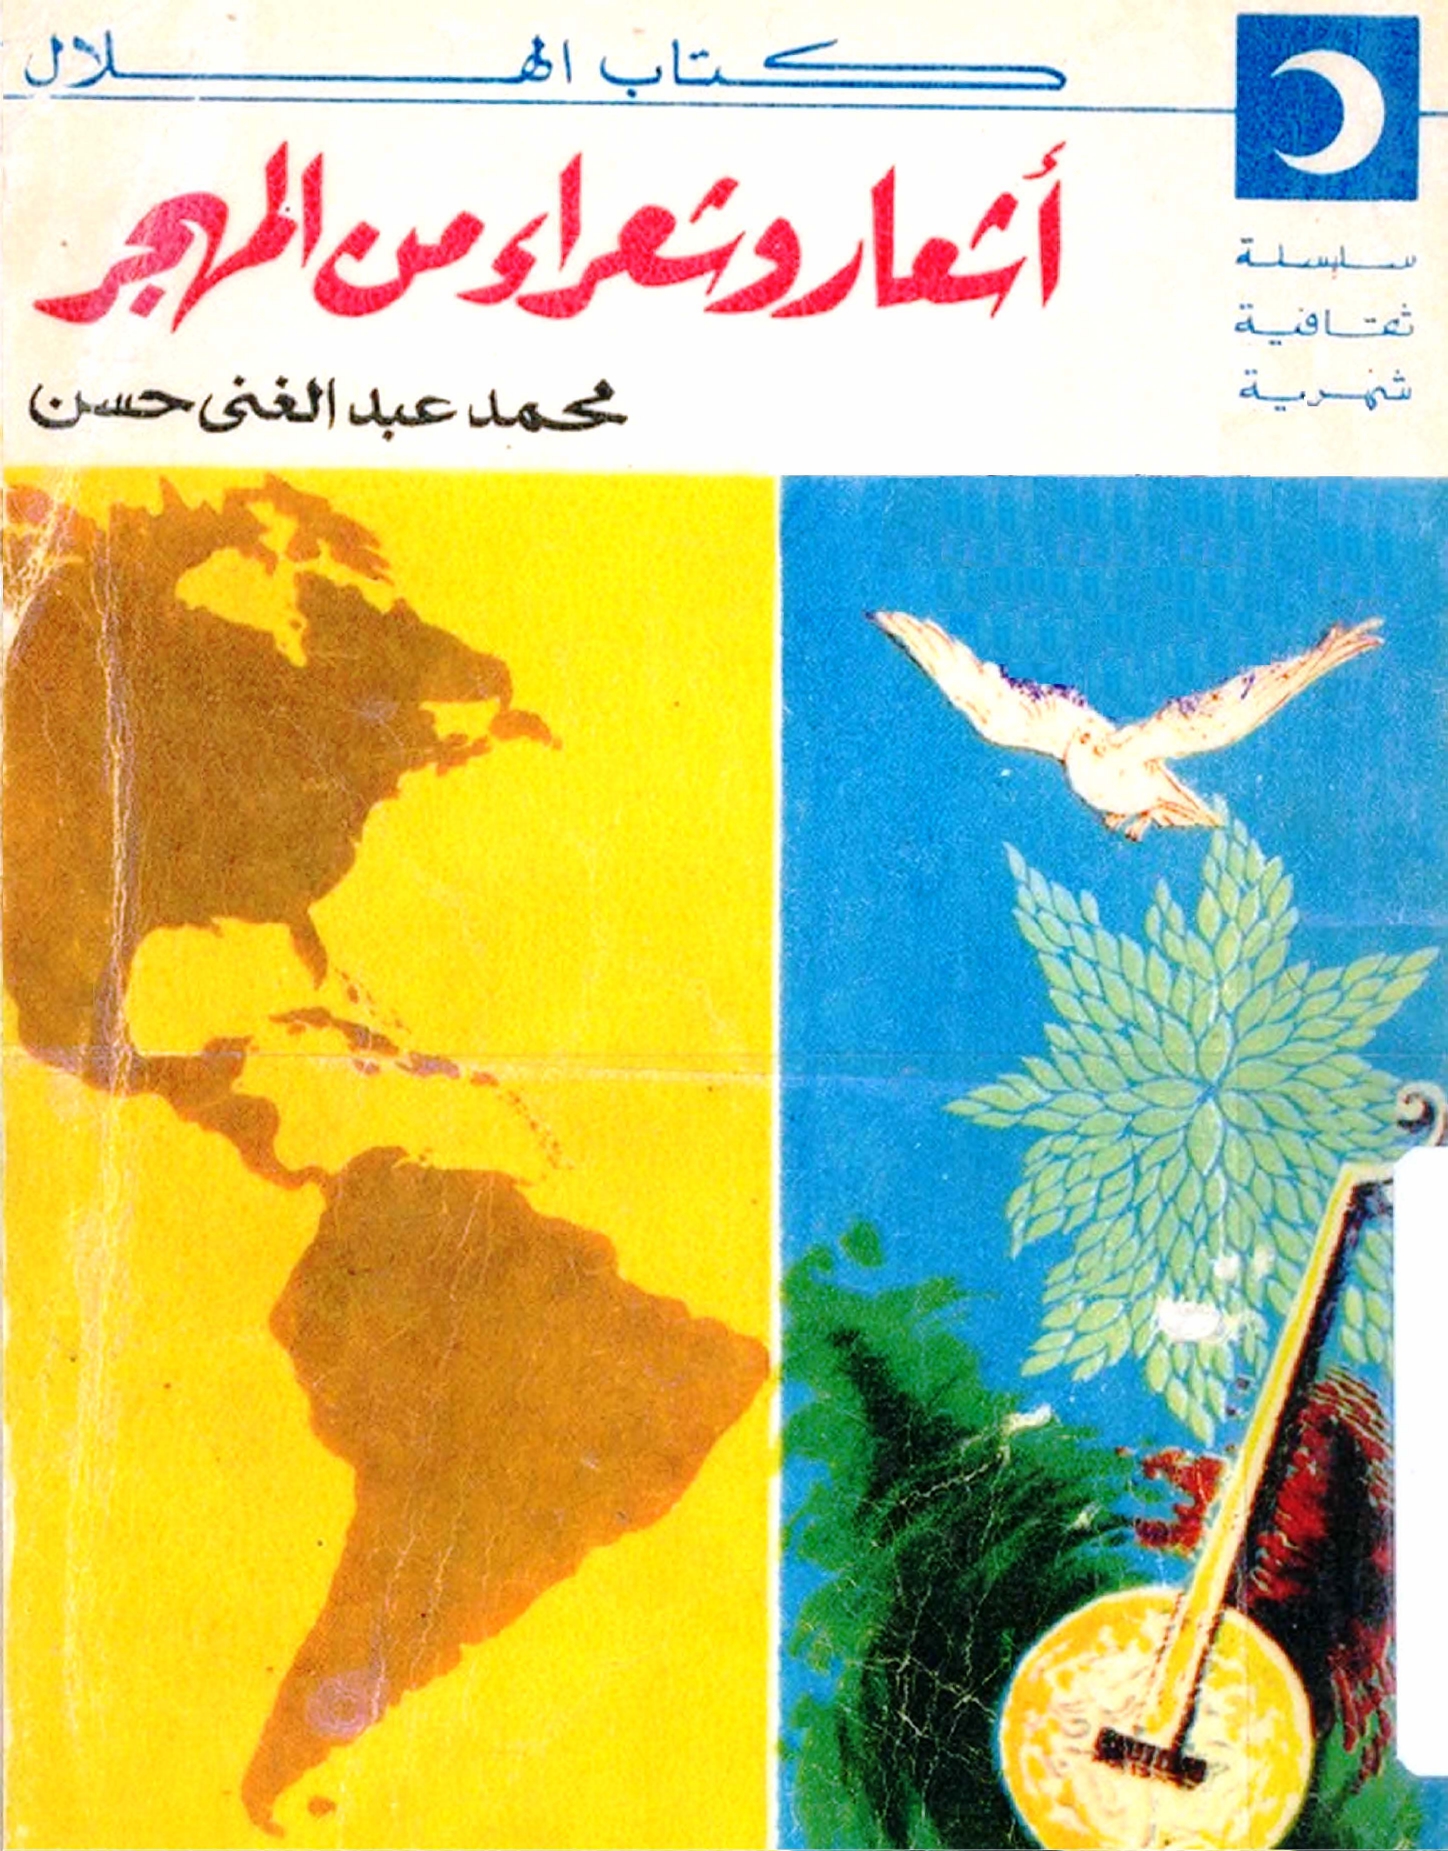 Mohammed Abdul Ghani Hassan, "Ashaár wa shuaára min al-Mahjar" (Poems and Poets from the Diaspora), Kitab al-Hilal, number 266, February 1973.